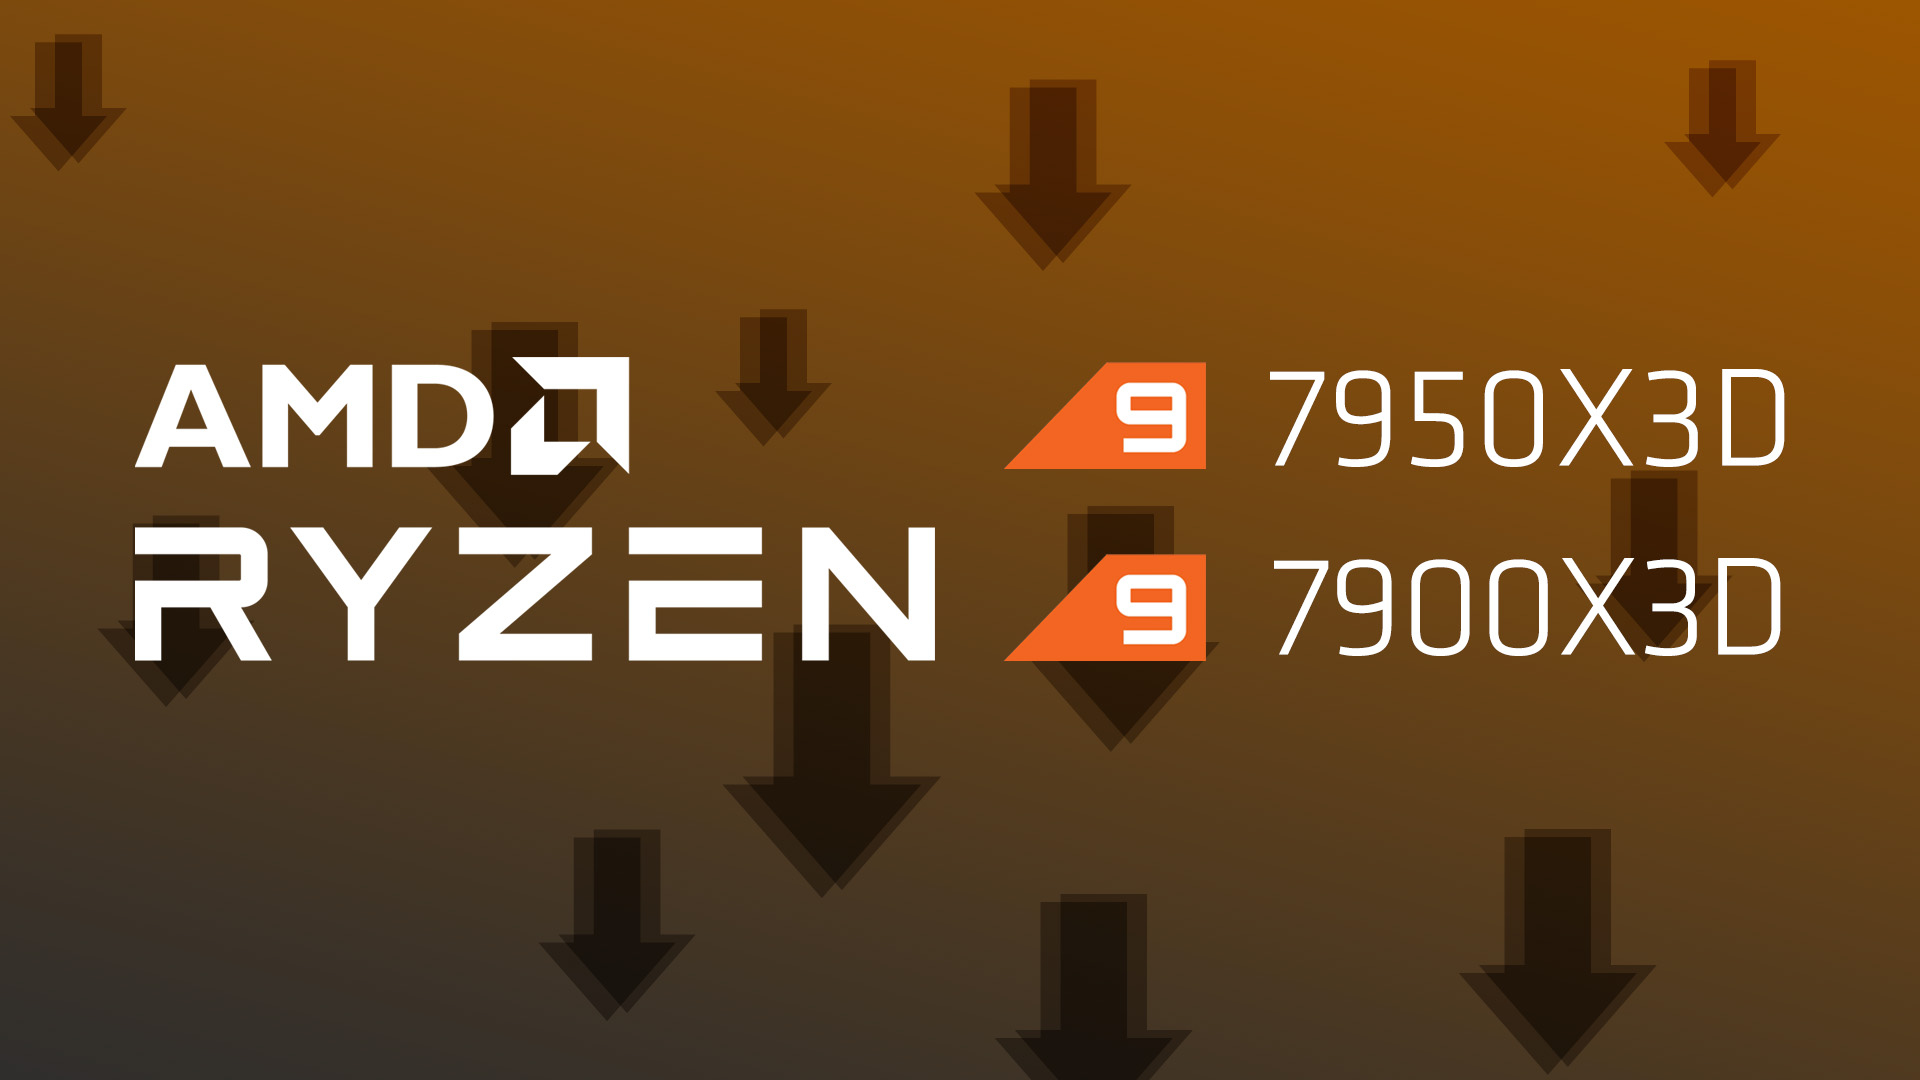 AMD Ryzen 9 7950X3Dなどが海外で1.6万円値下がり。Ryzen 7 5800X3Dも 